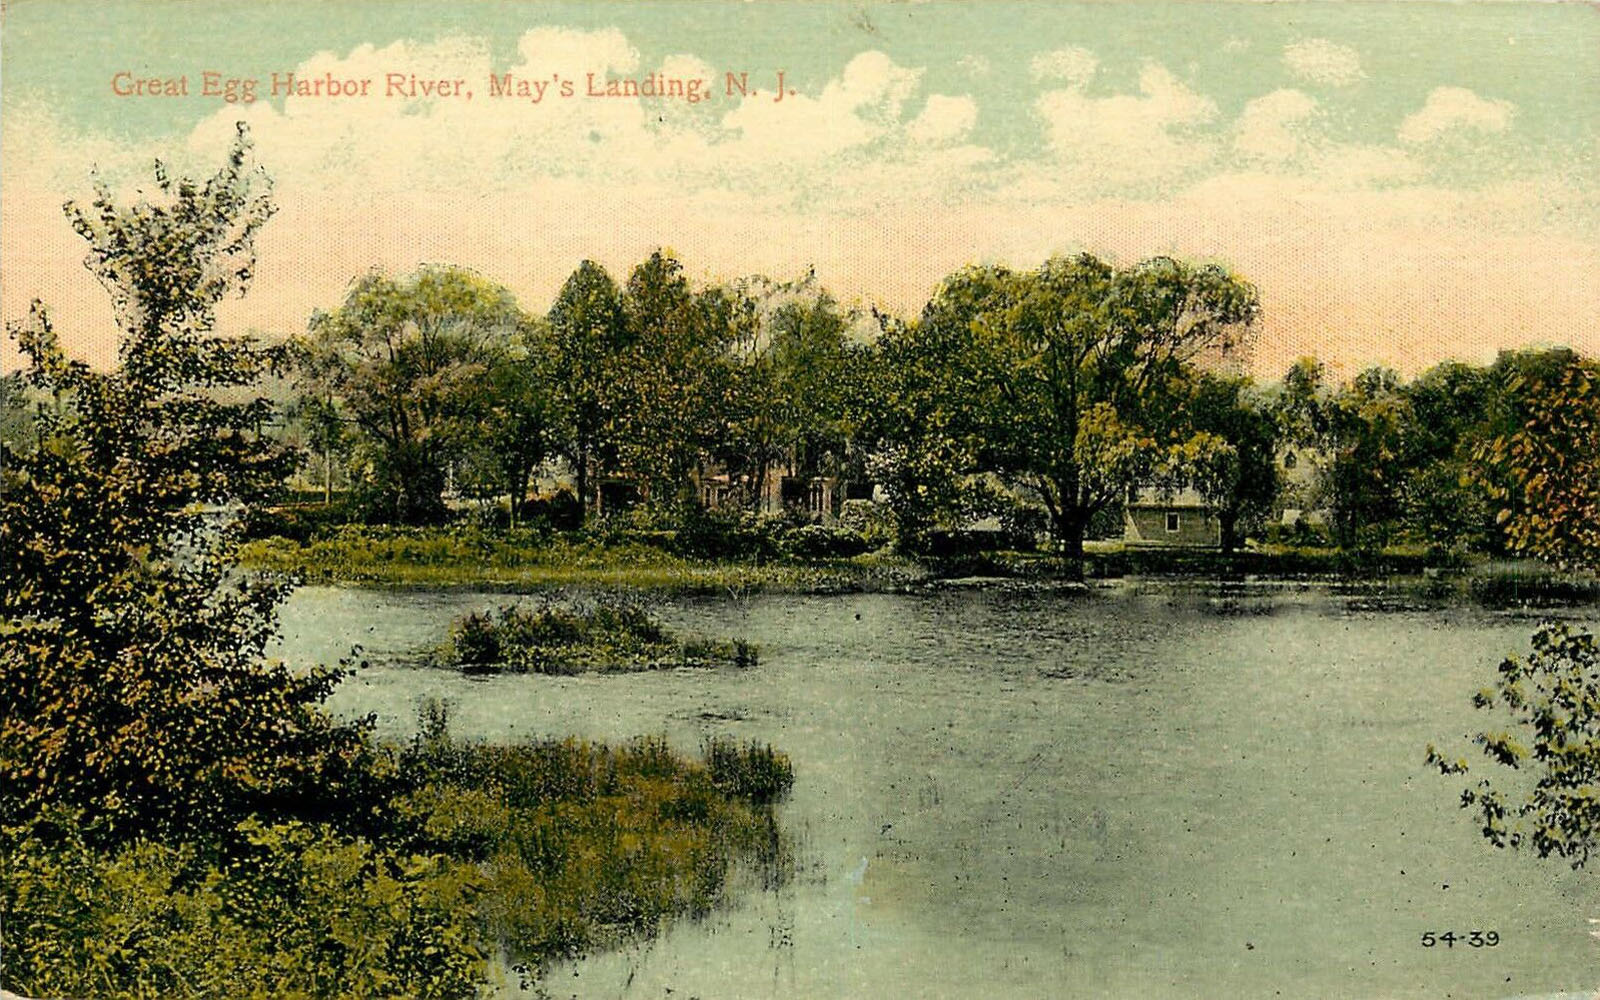 Mays Landing - Great Egg Harbor River - Houses on Bank - 1910